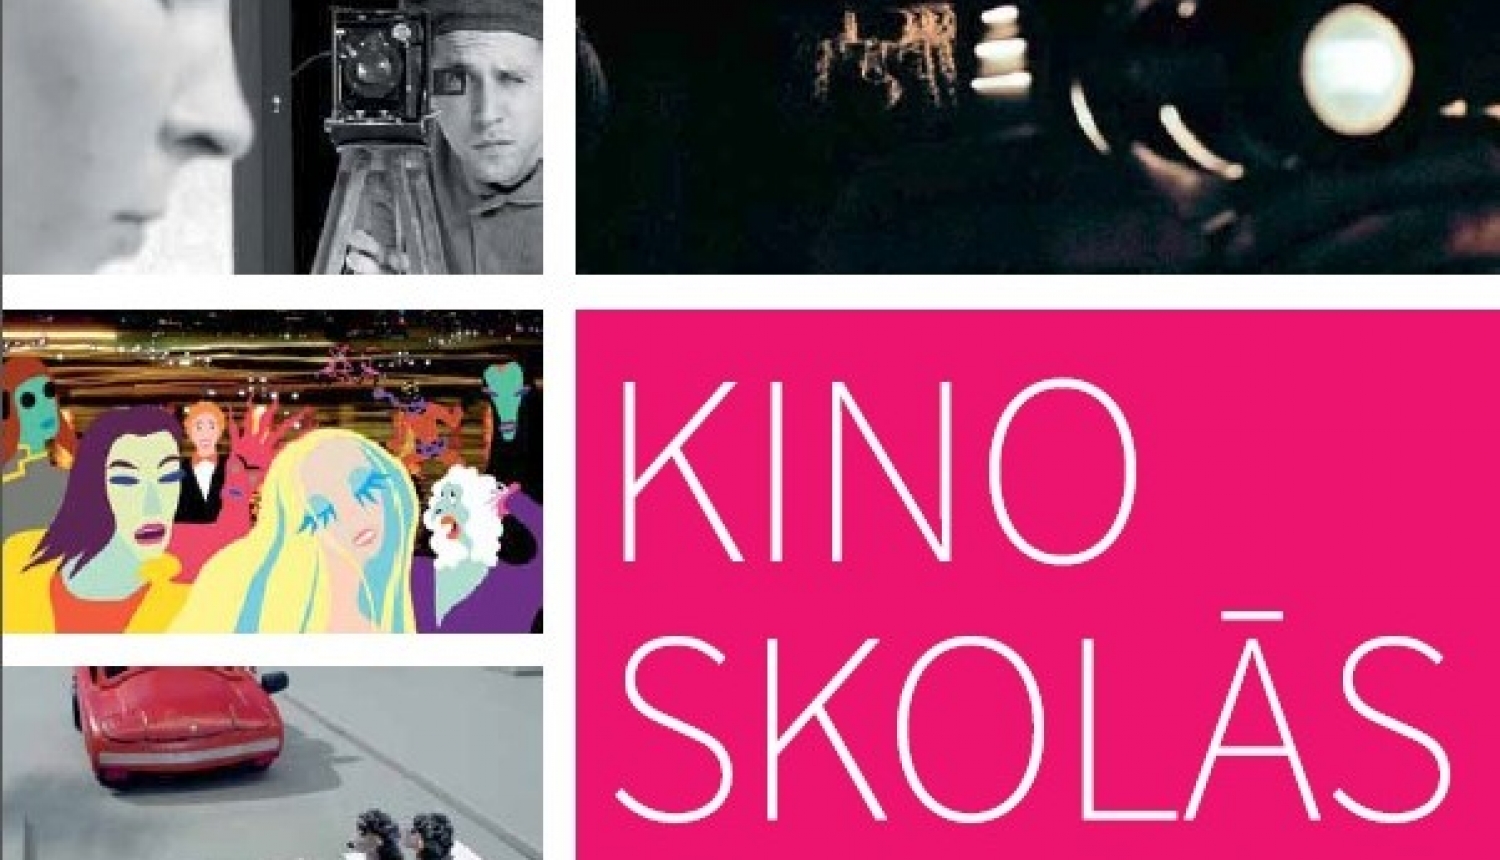 Launch of new film education intiative “Kino Skolās”